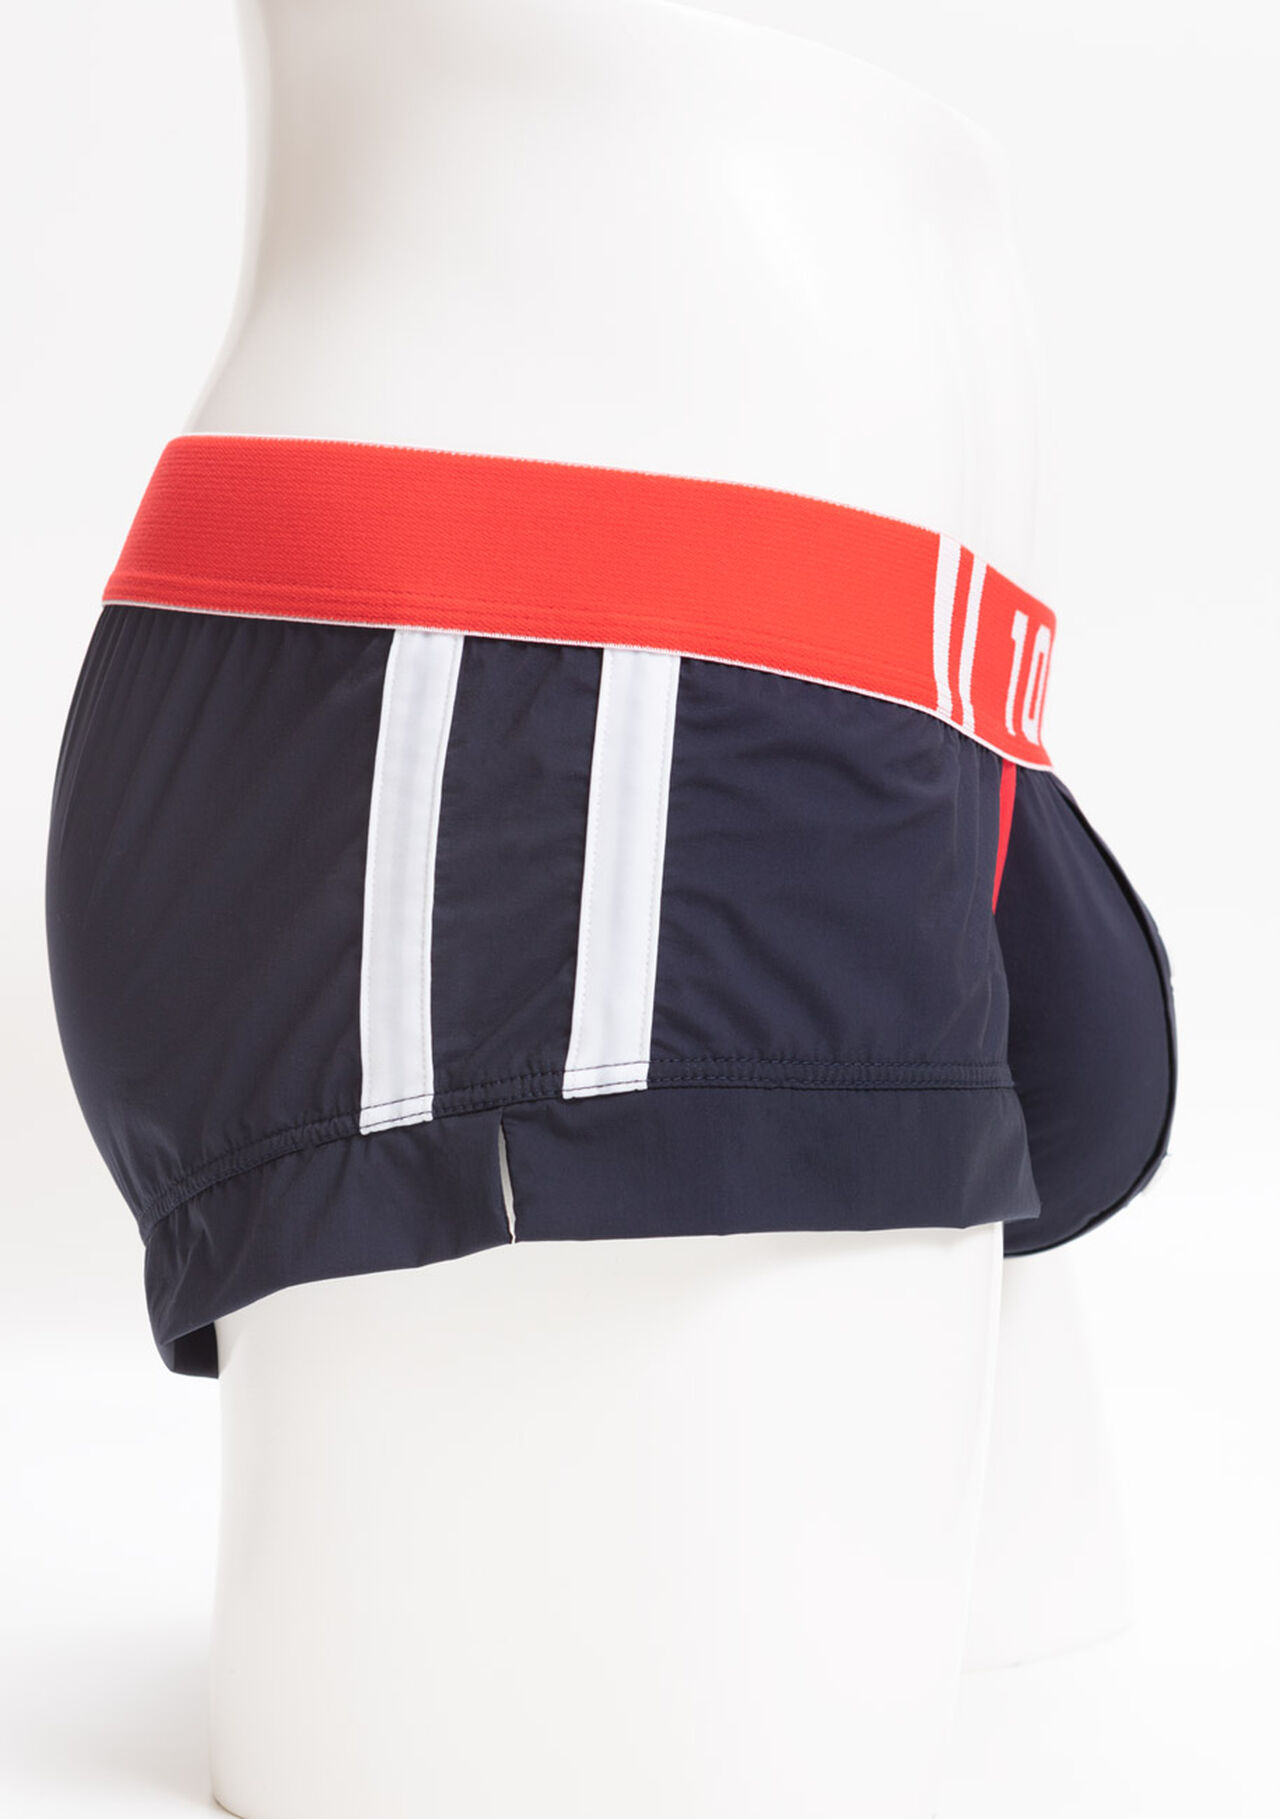 Scratched Denim Lace-Up Bikini  Men's Underwear brand TOOT